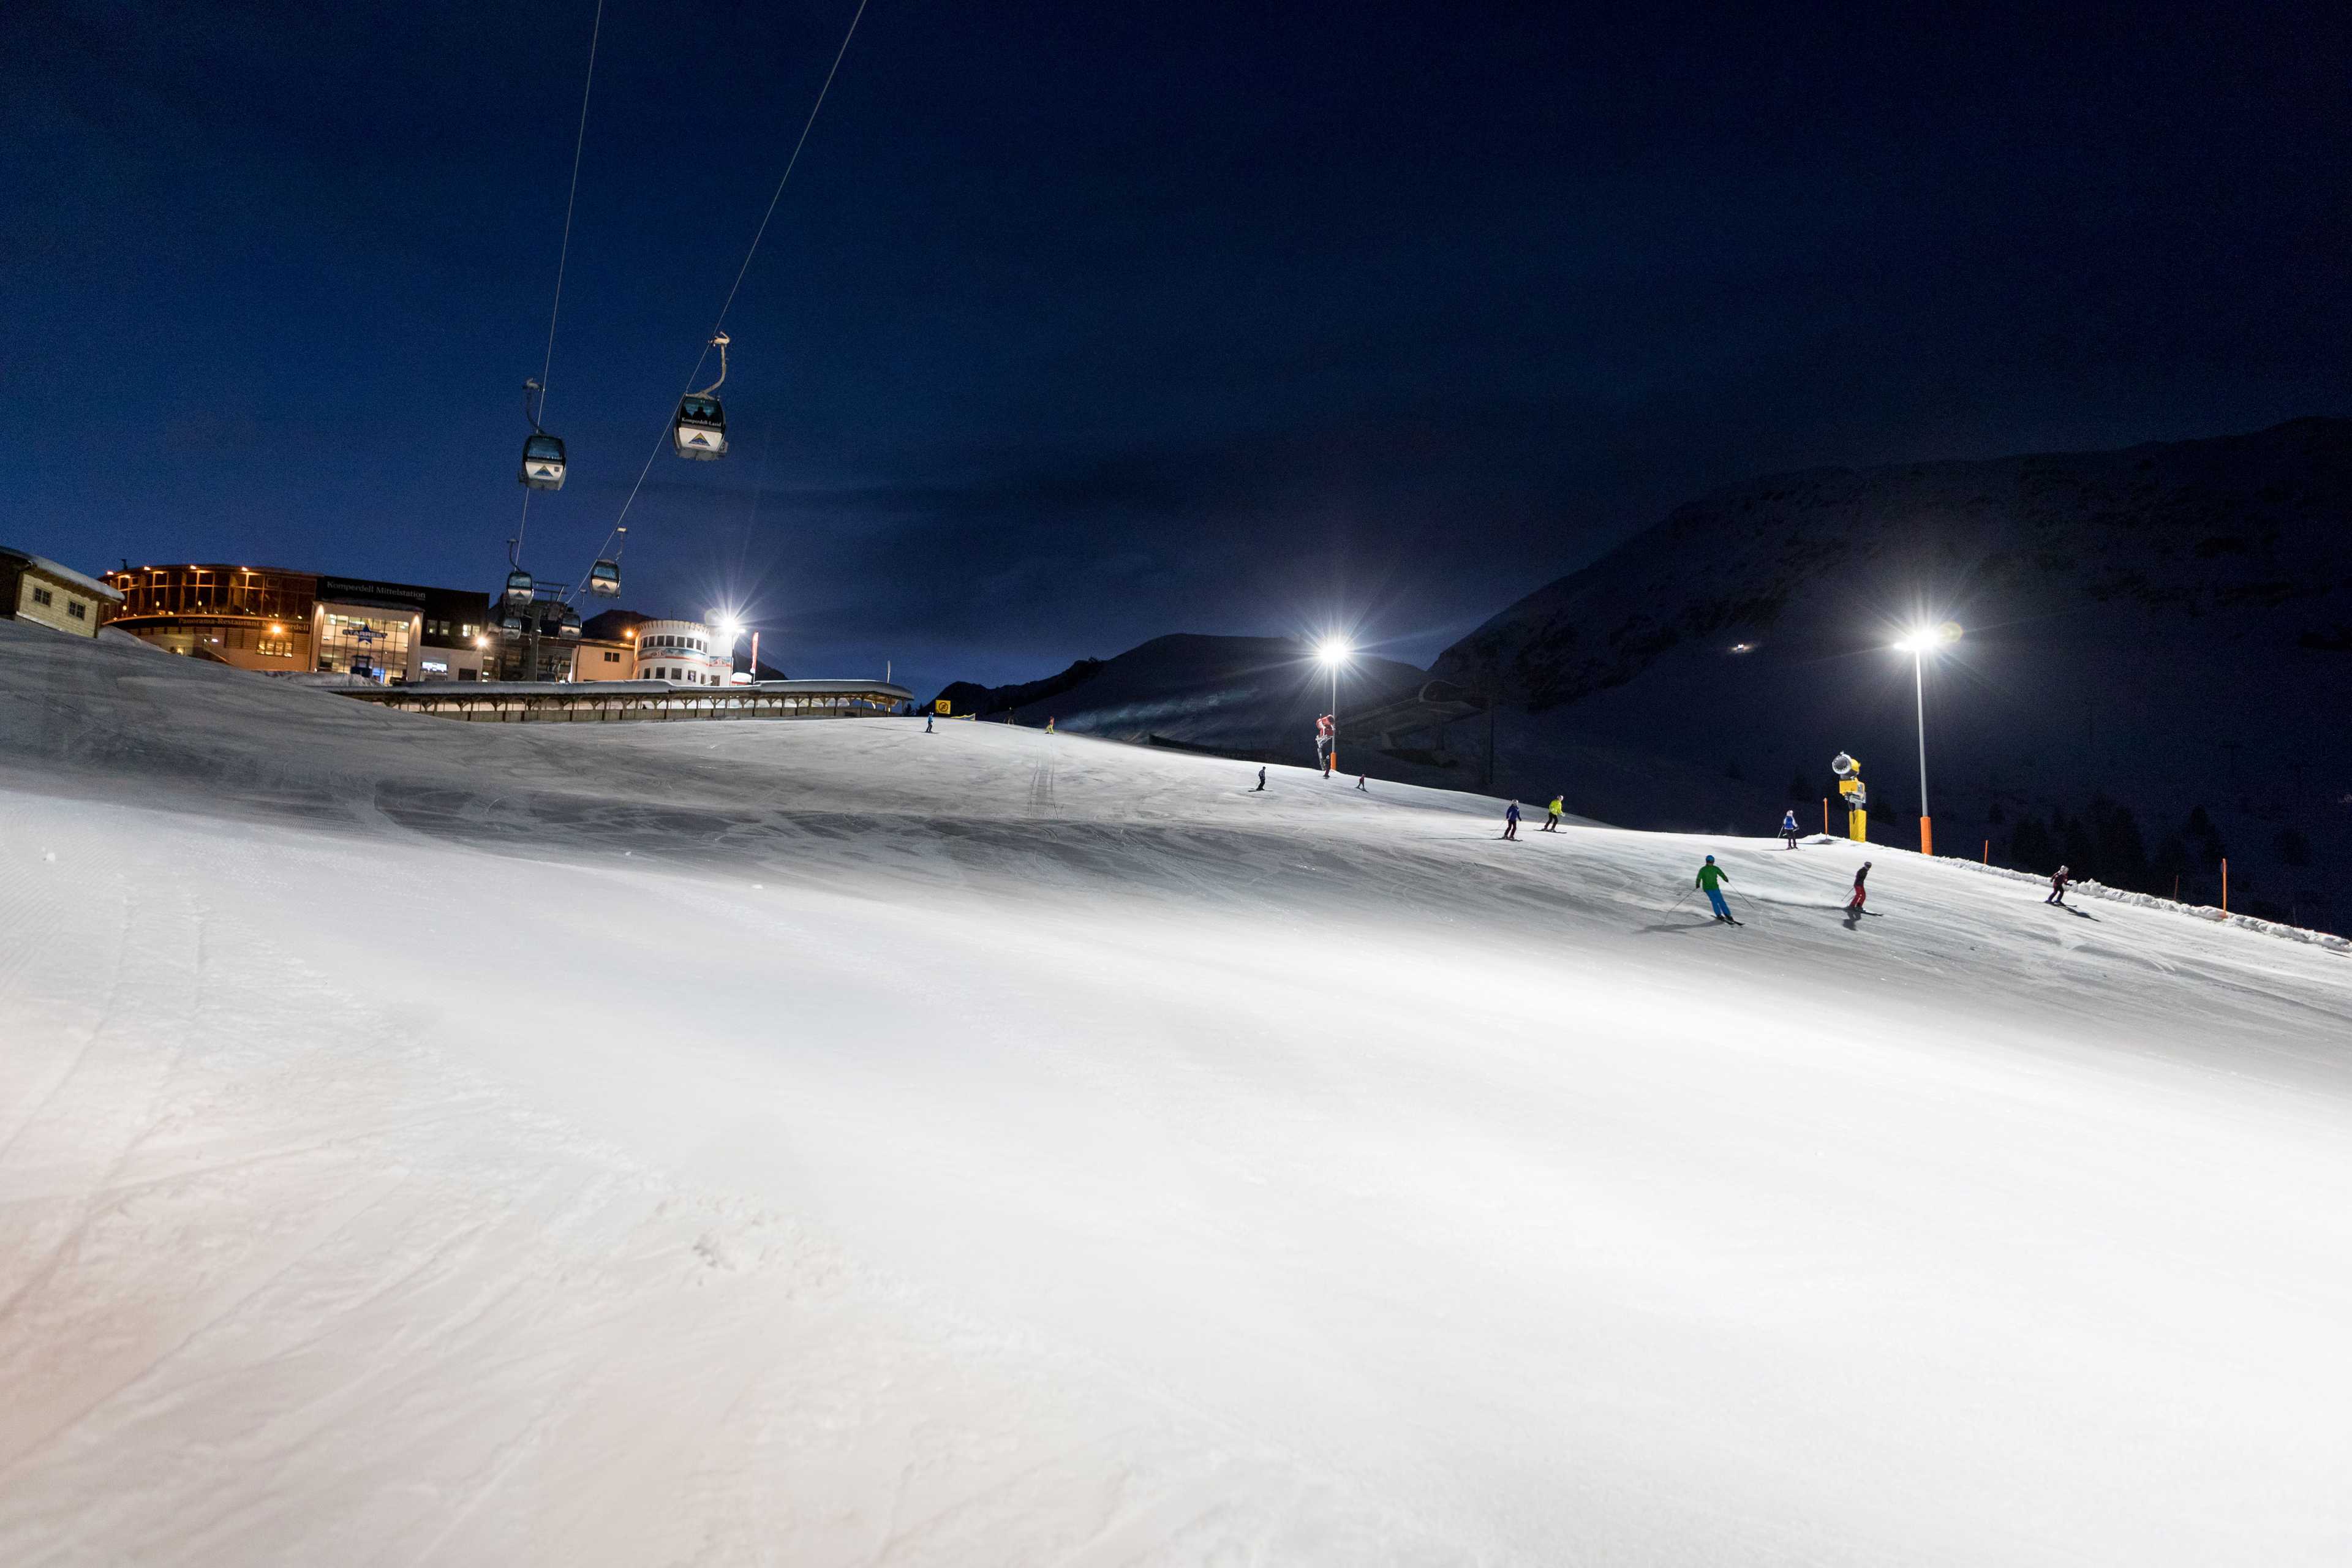 Night skiing in Serfaus, Austria